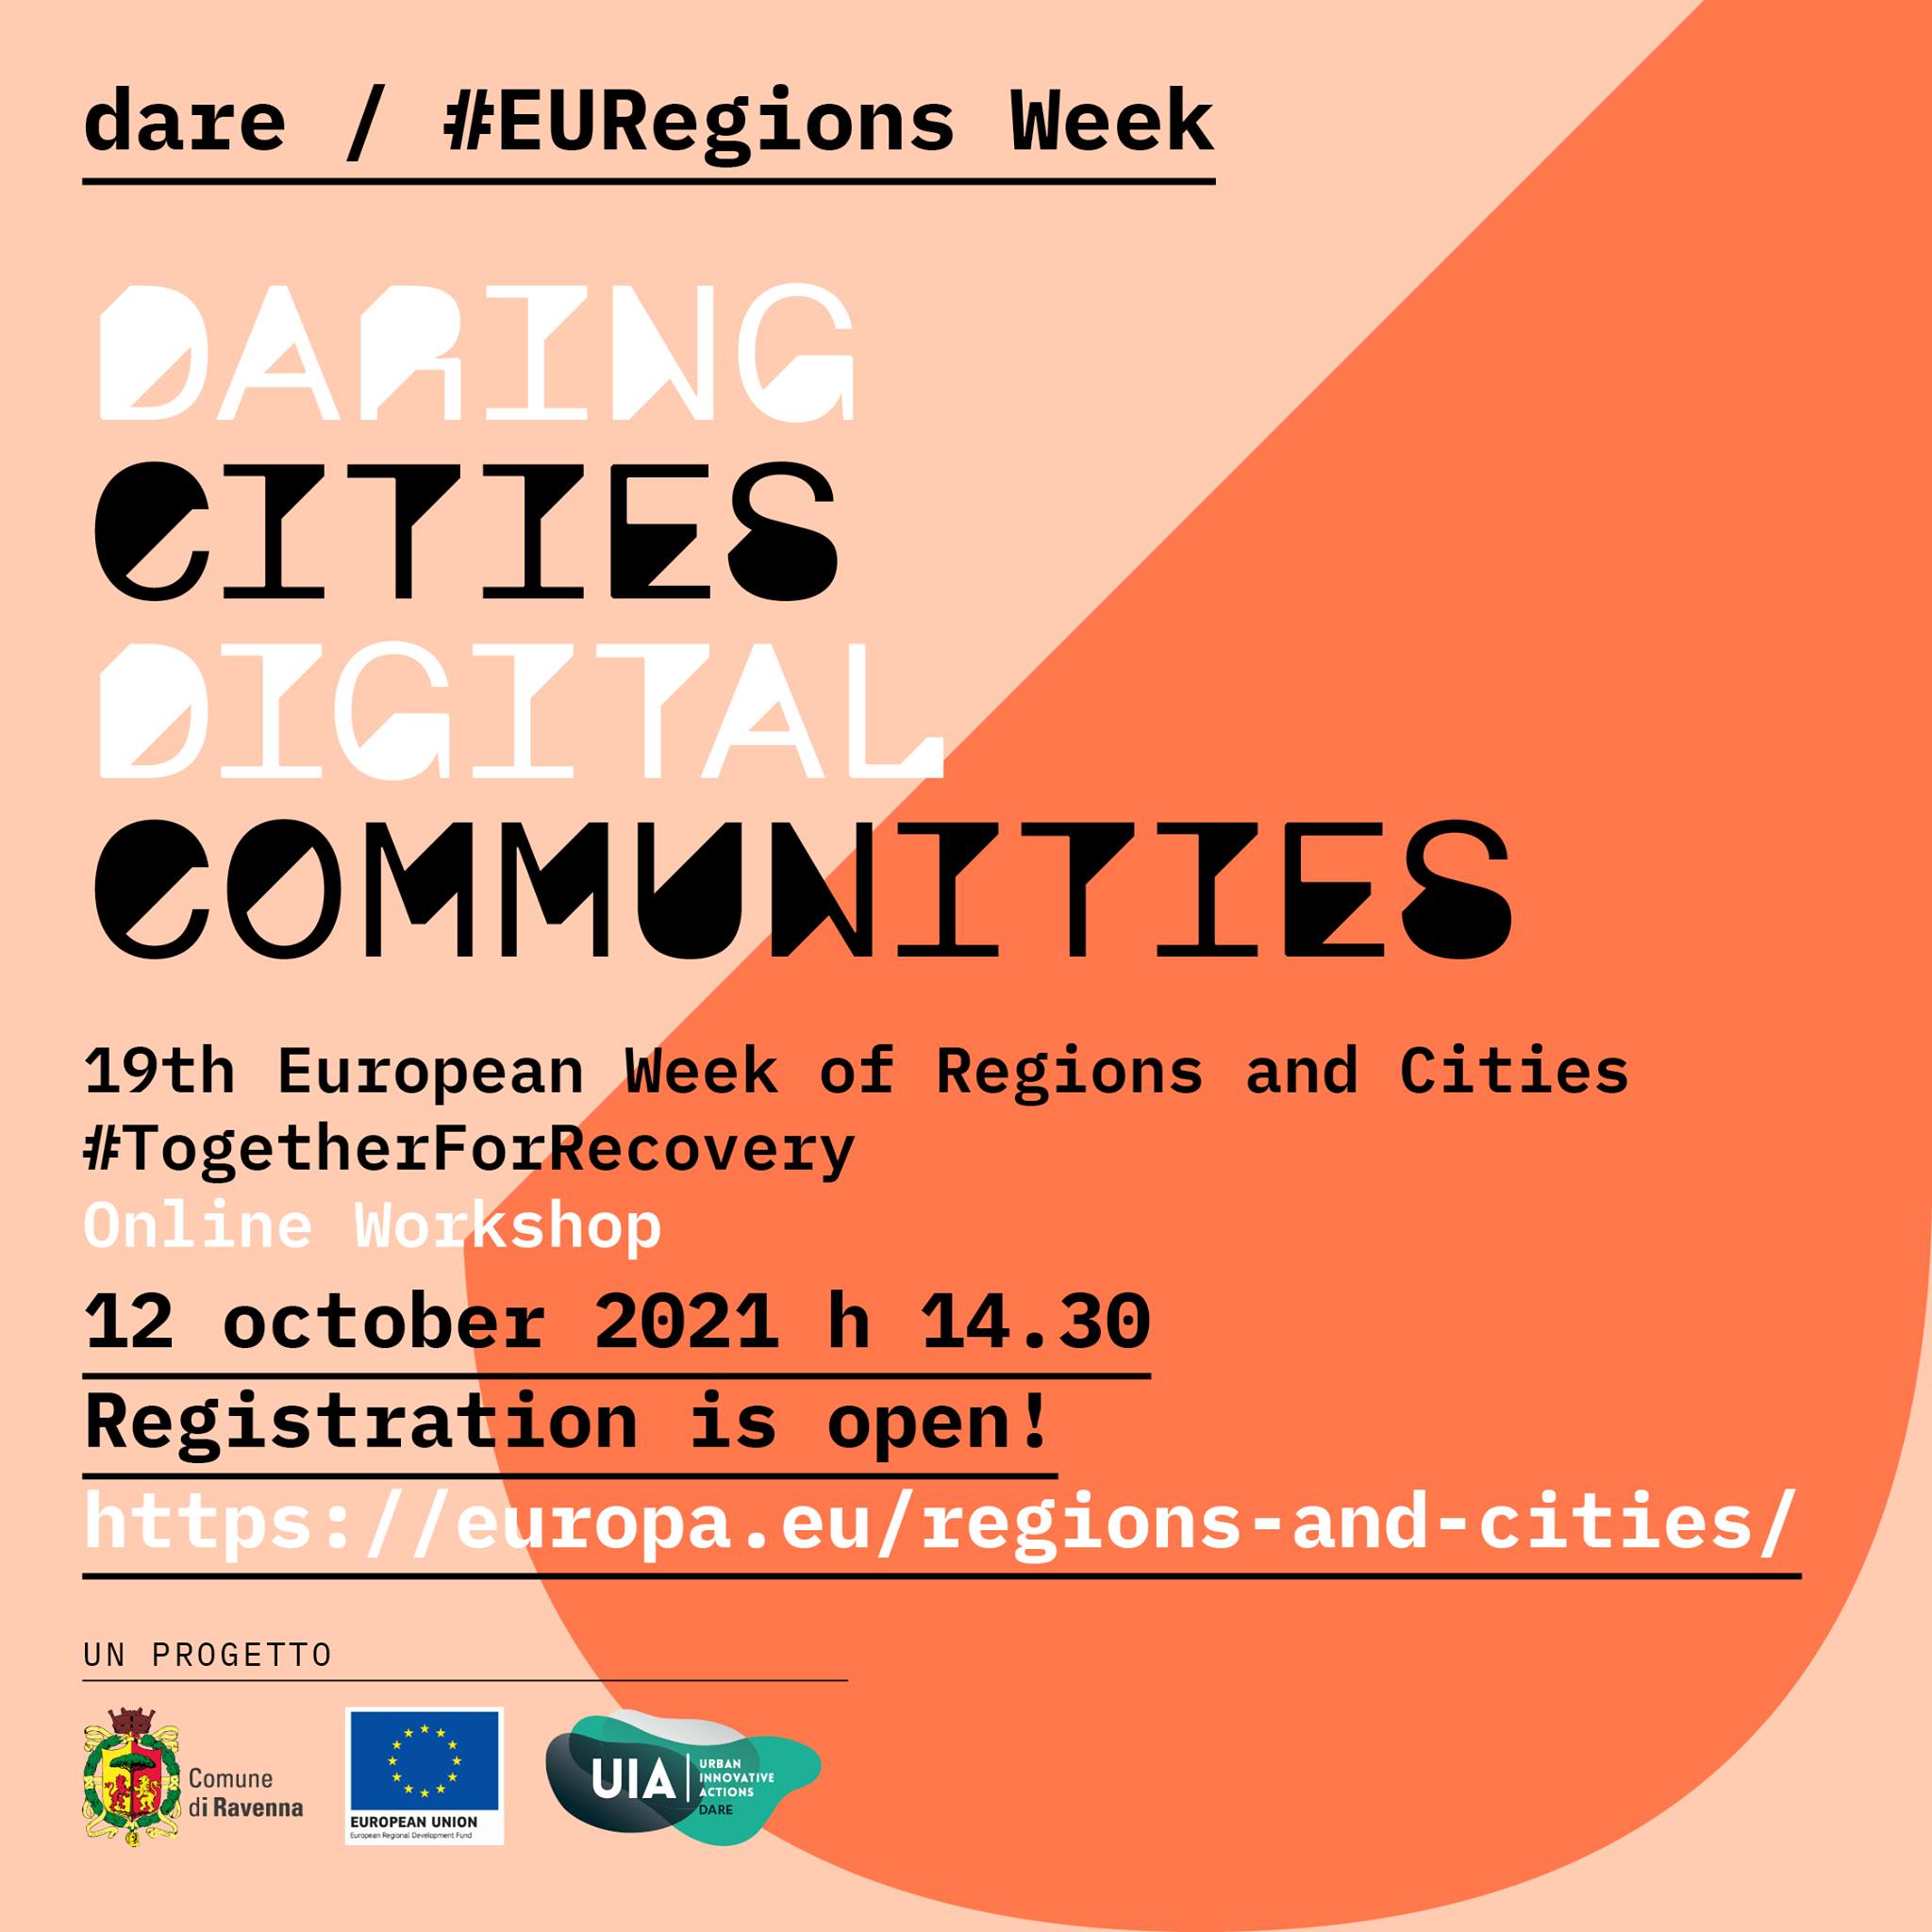 Daring Cities Digital Communities